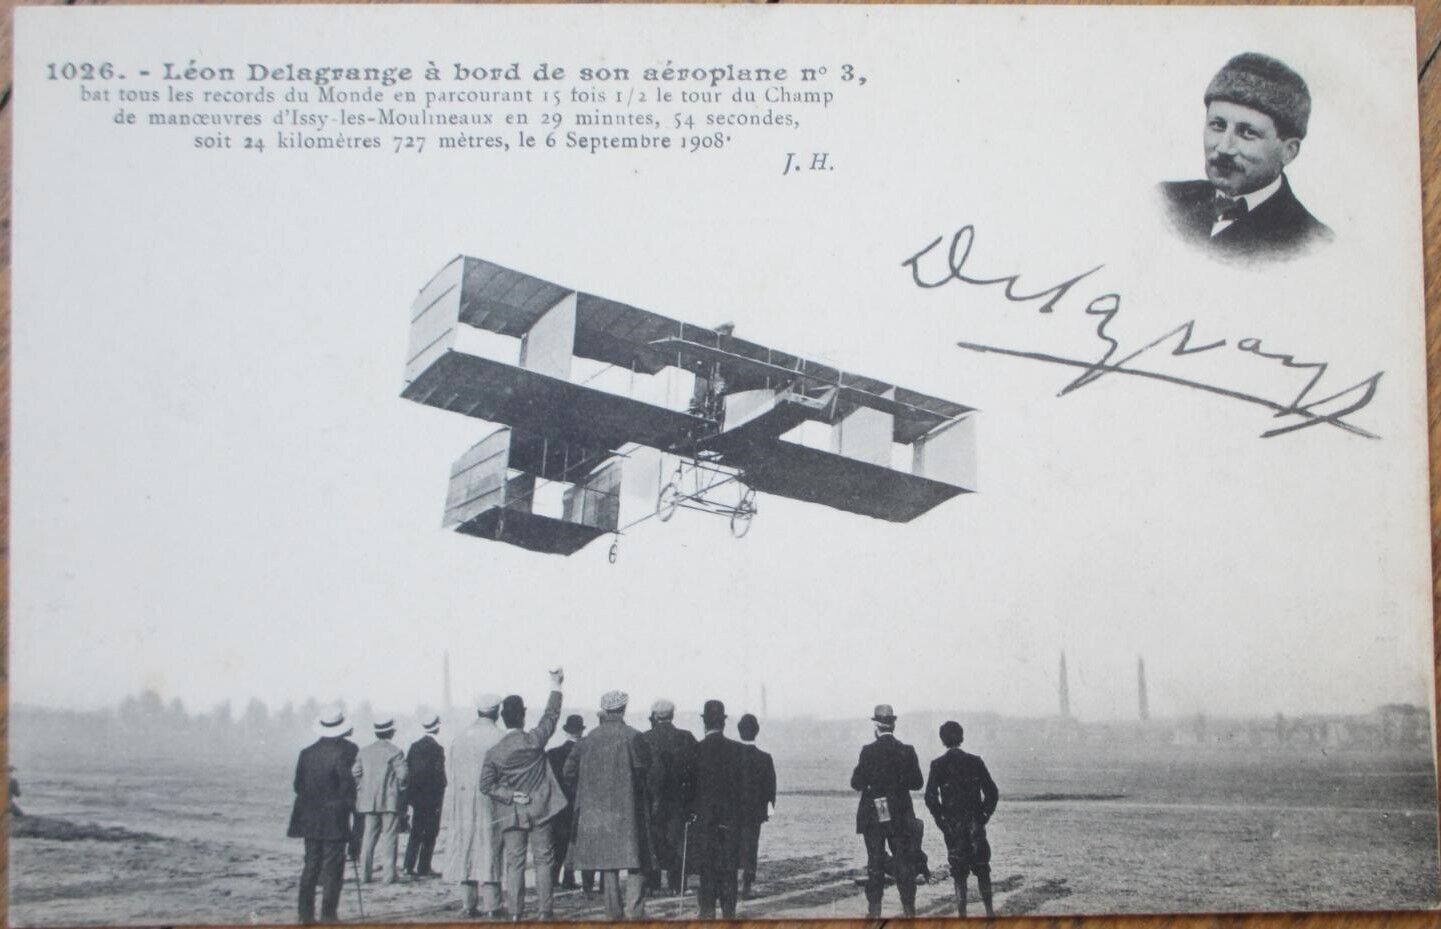 French Aviation 1908 Postcard, Pilot Leon Delagrange, Airplane Biplane No. 3